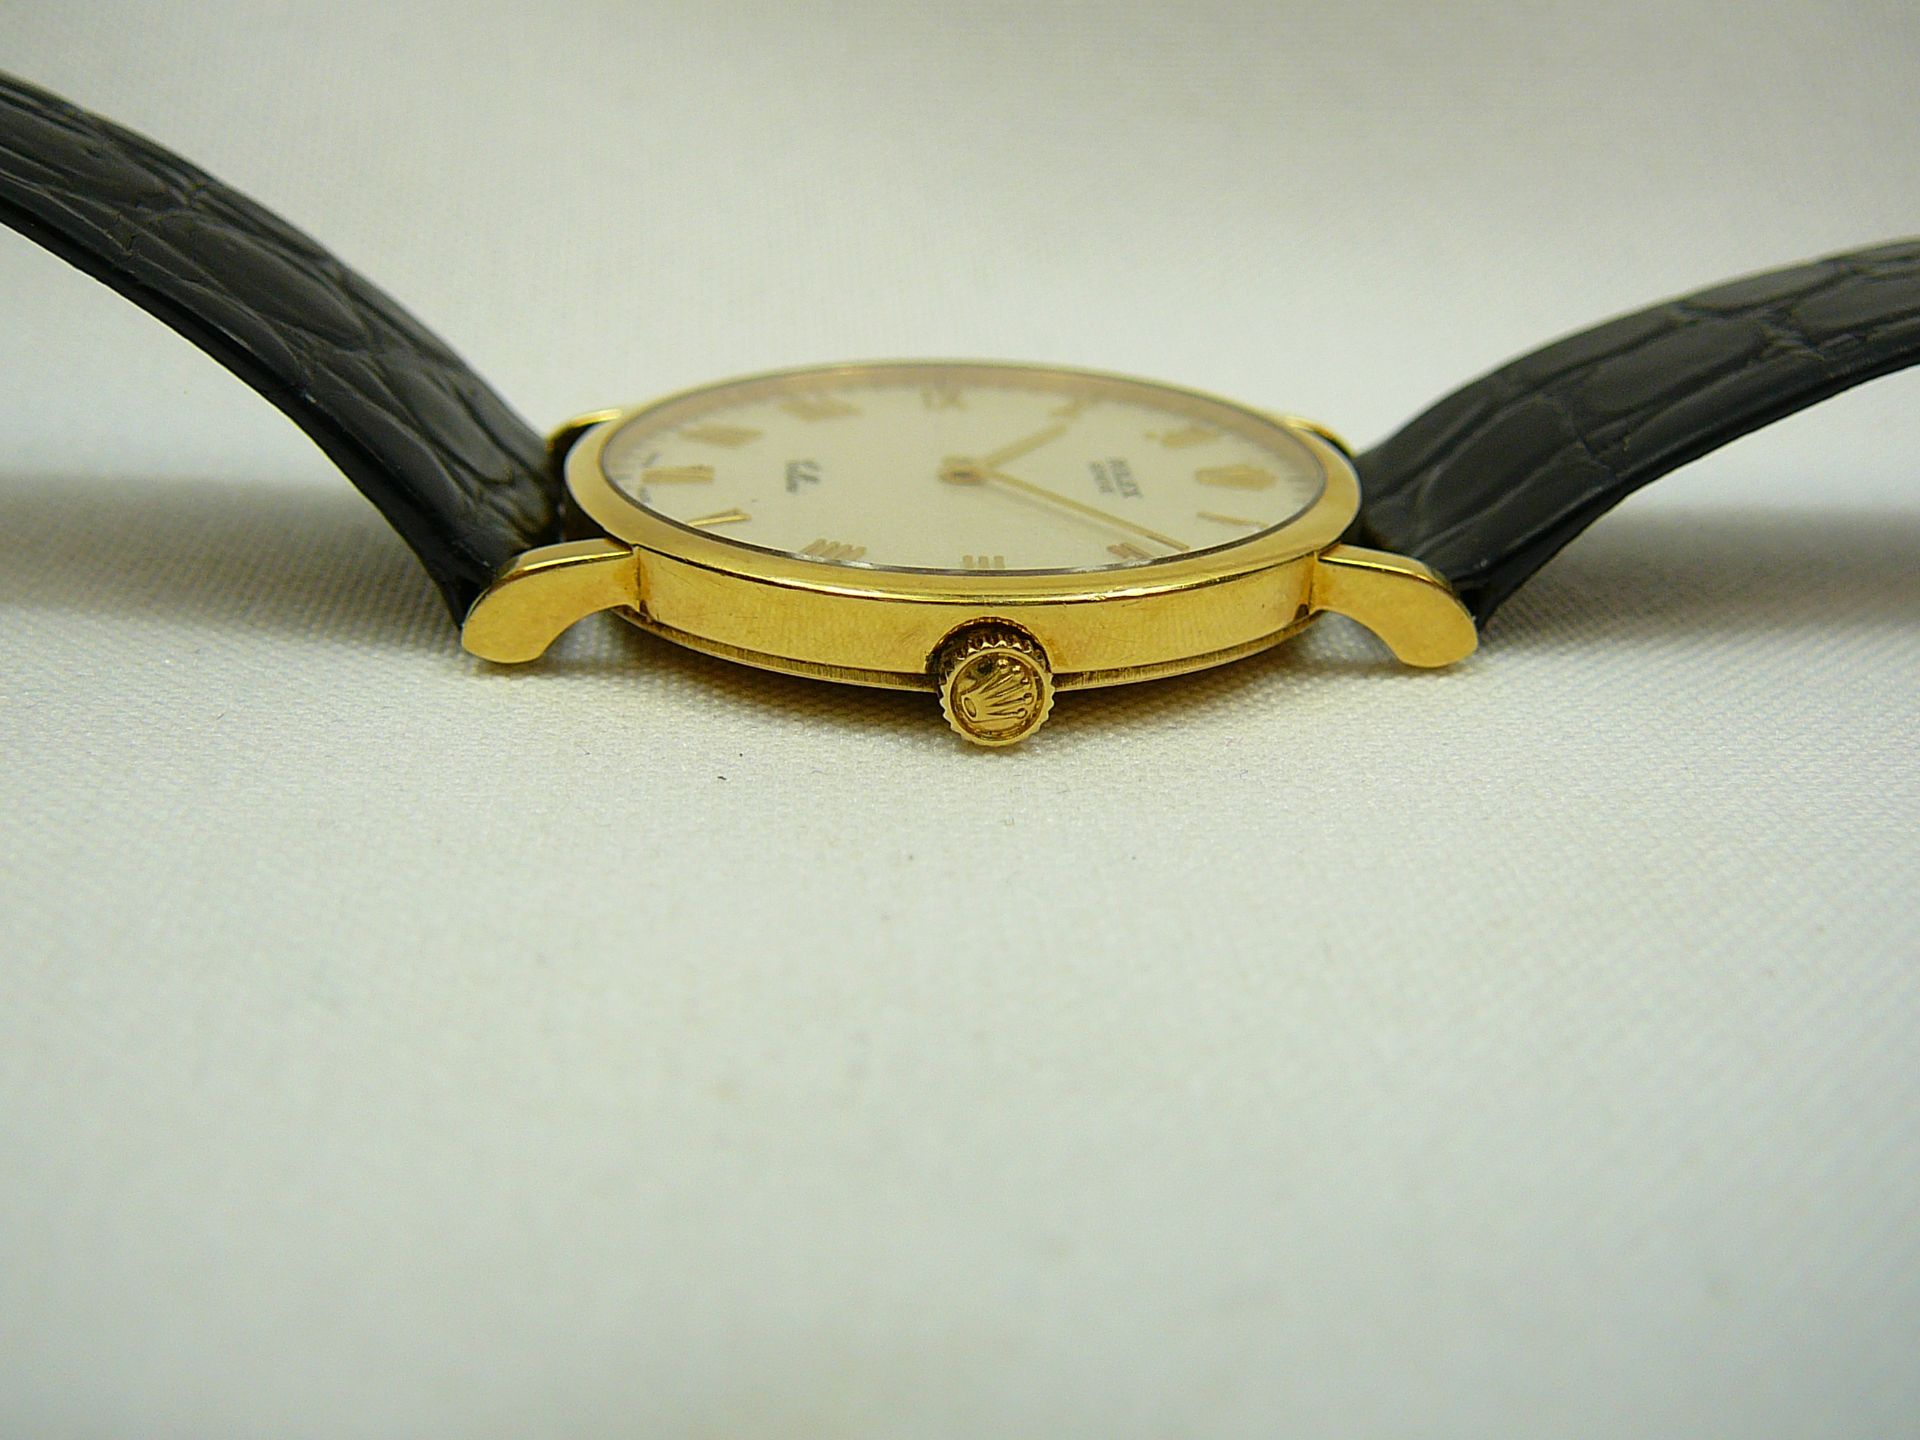 Gents Gold Rolex Wristwatch - Image 4 of 5